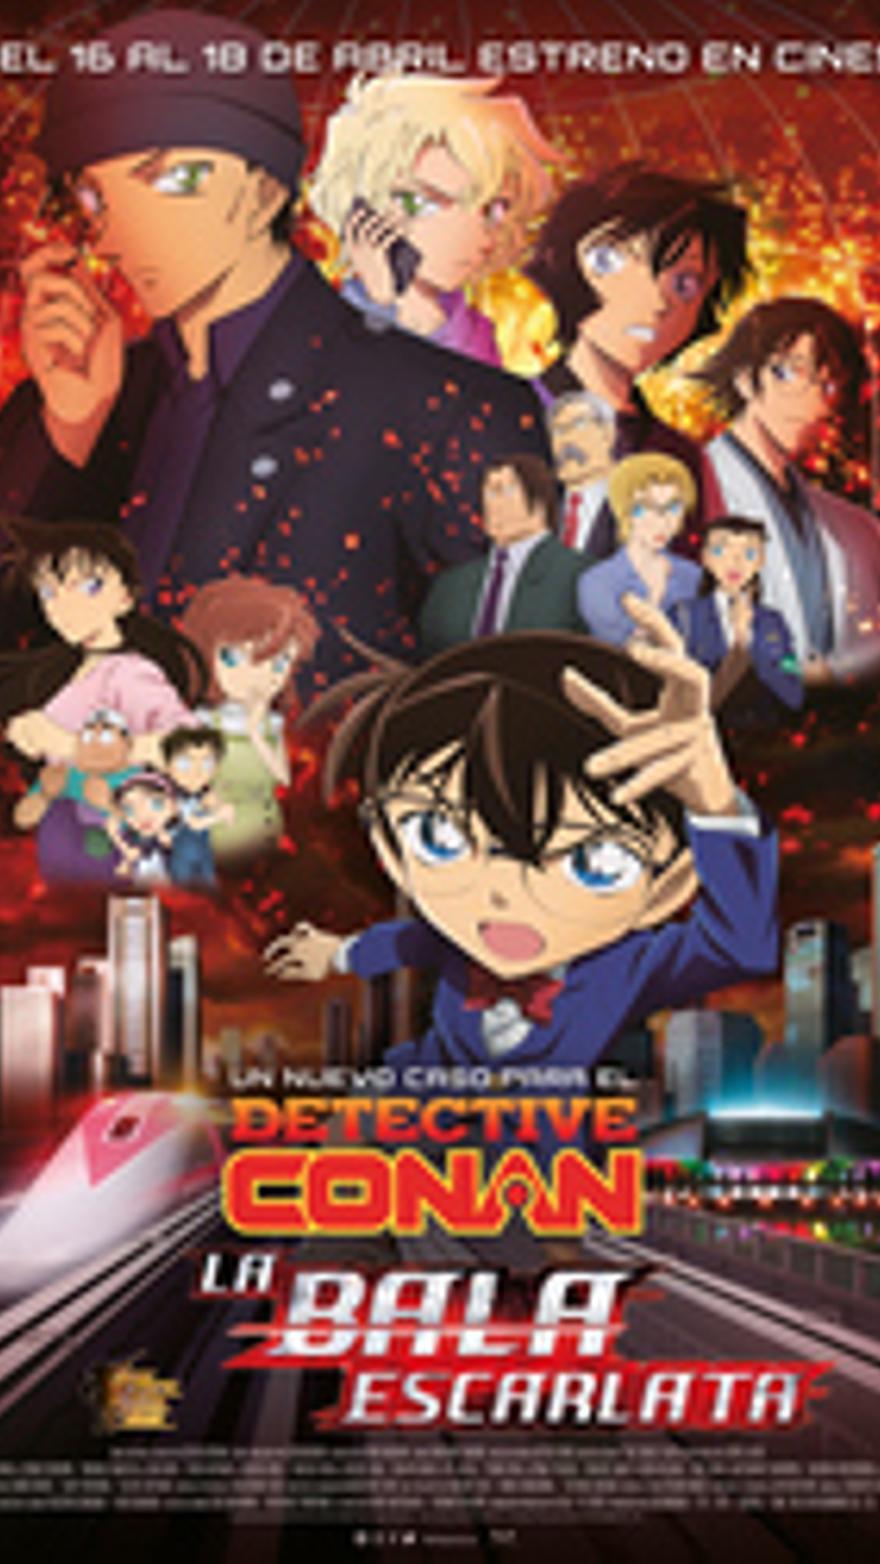 Detective Conan: La bala escarlata